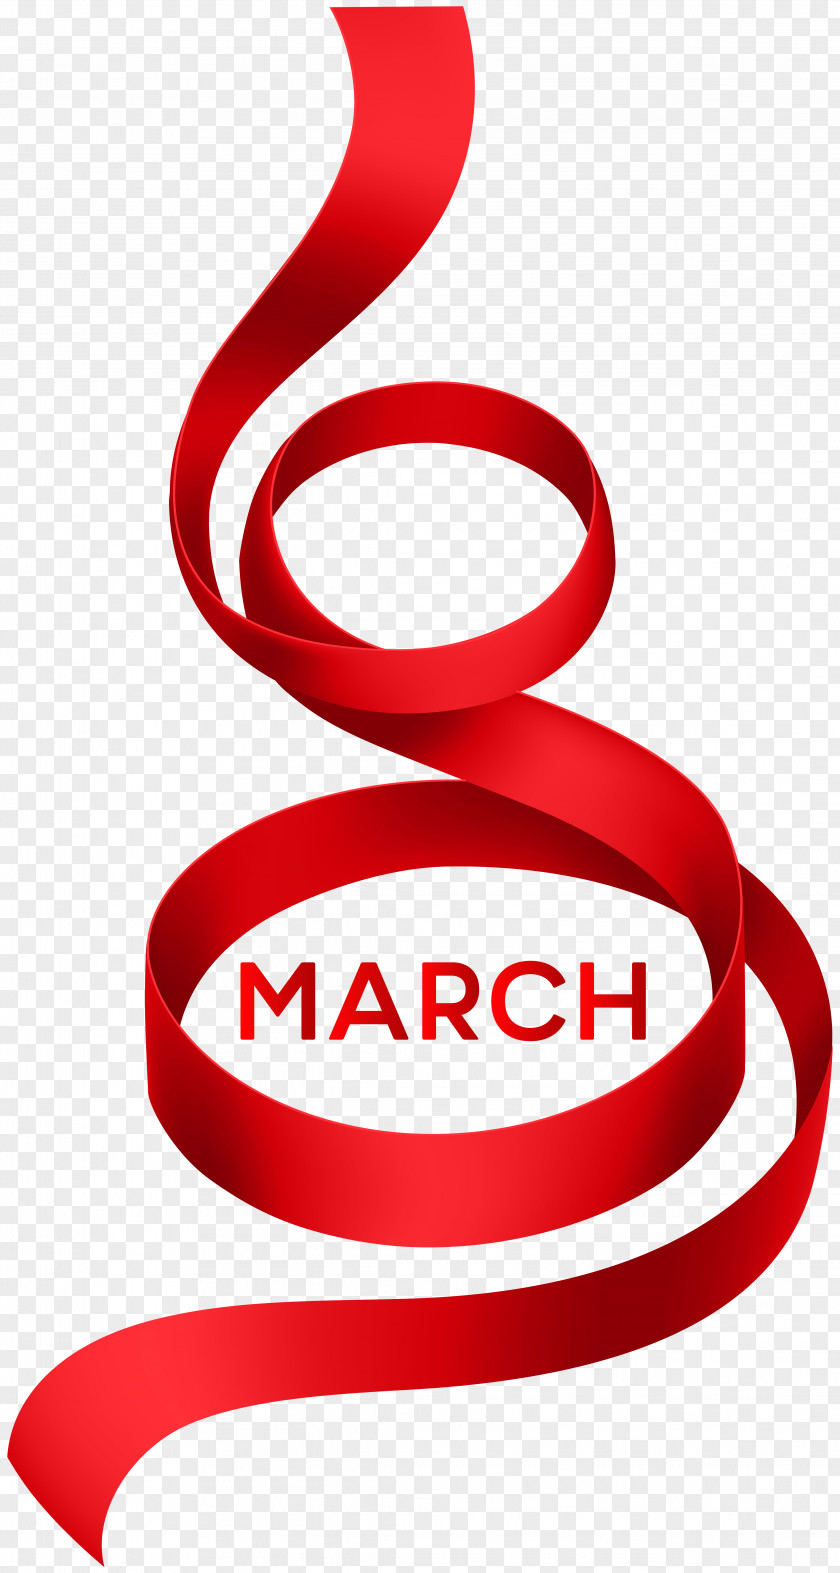 8 March International Women's Day Clip Art PNG